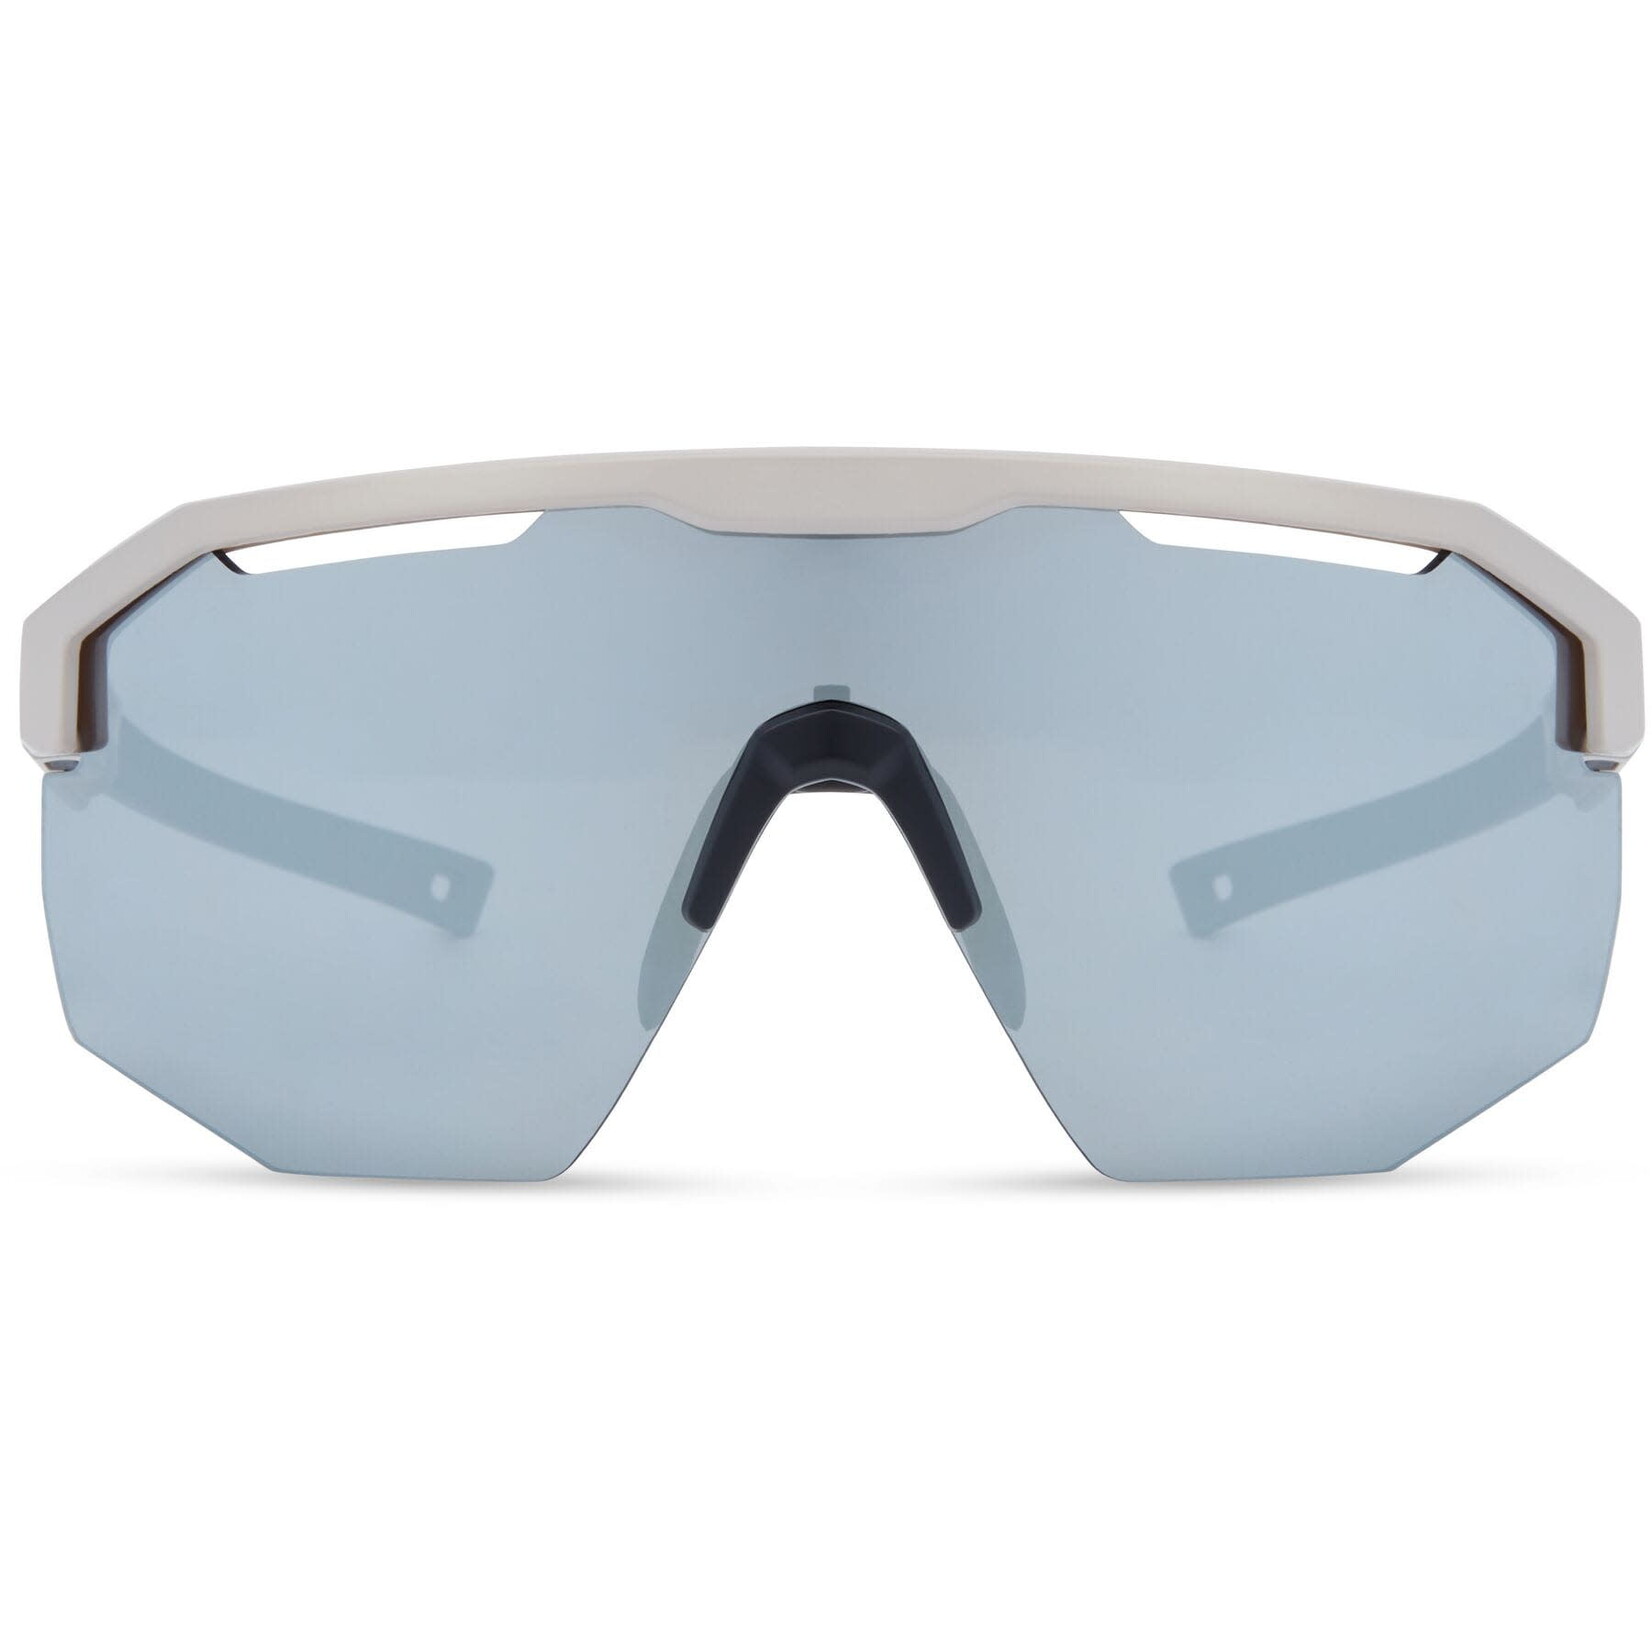 Madison Madison Cipher Sunglasses - 3 pack - desert sand / silver mirror - sustainable